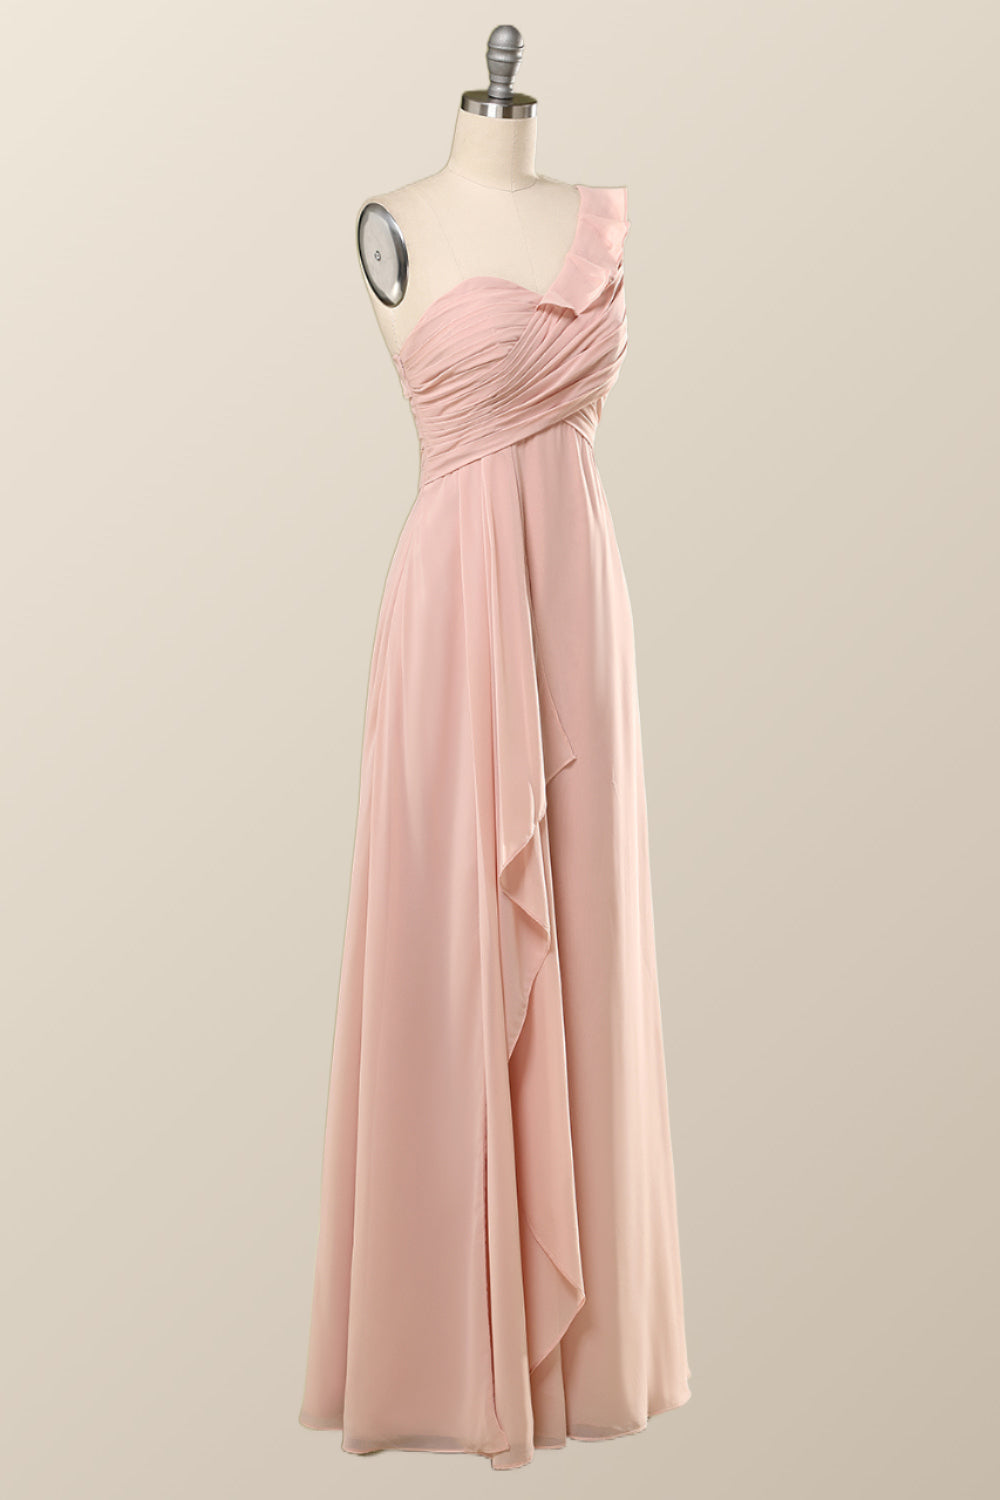 One Shoulder Blush Pink Chiffon Long Bridesmaid Dress